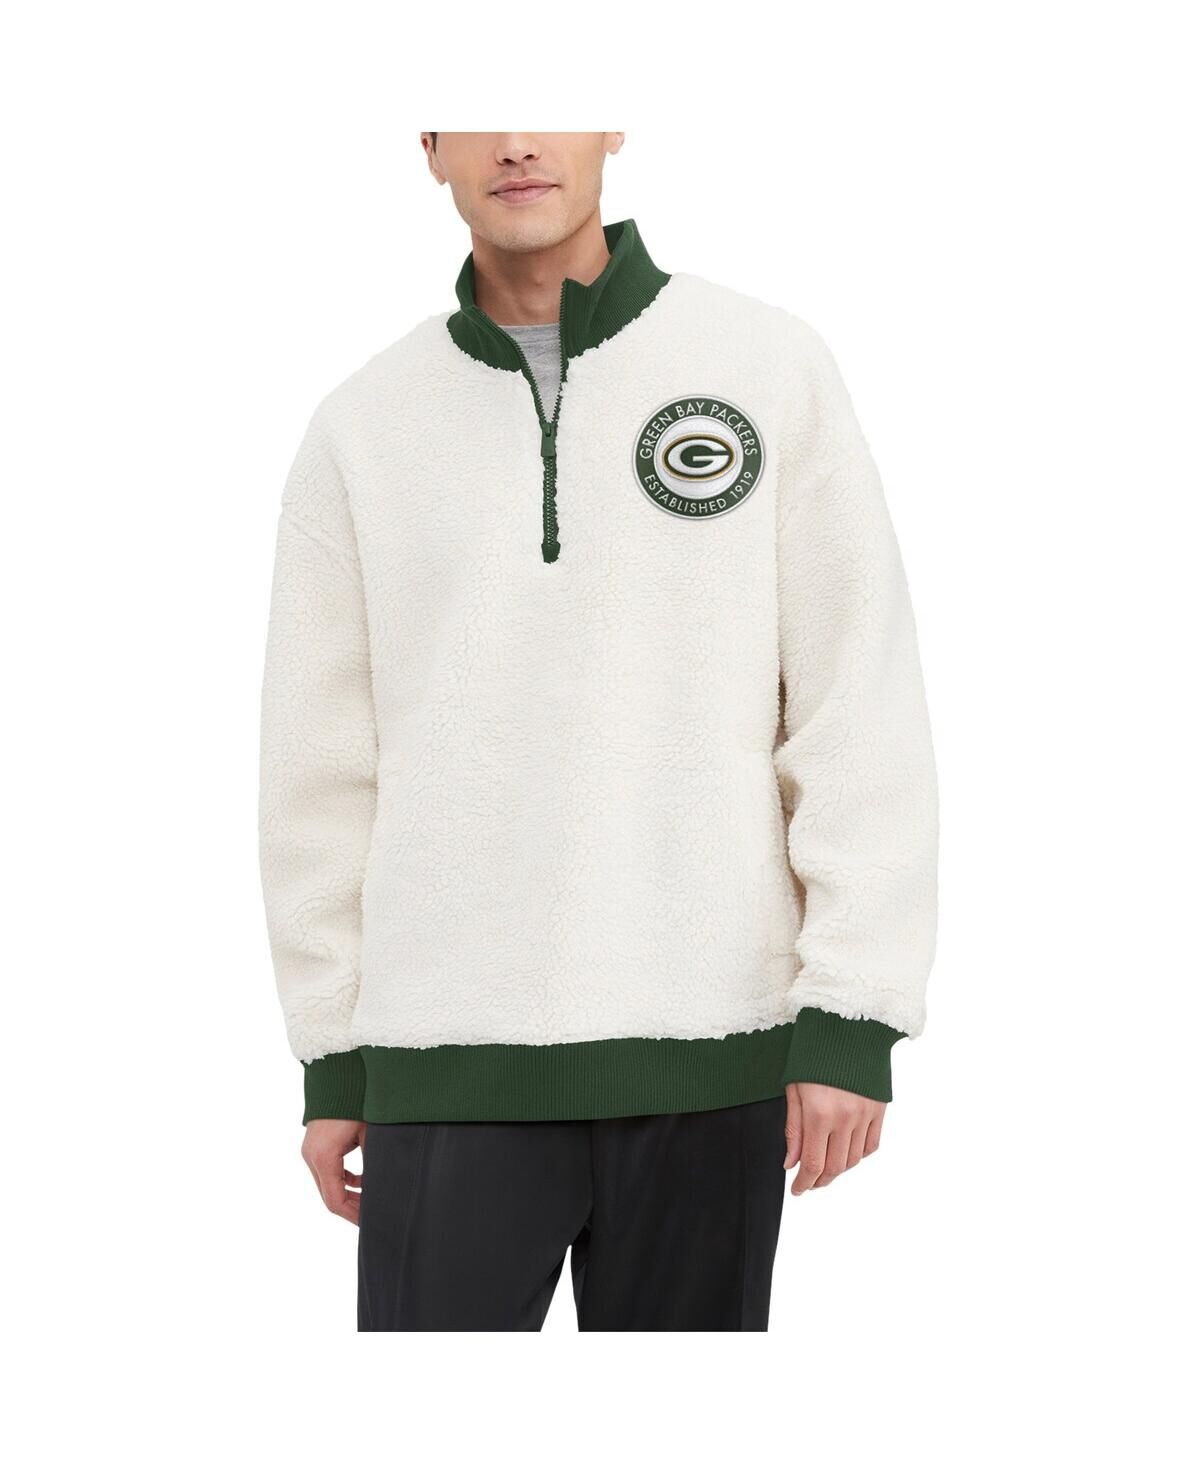 Tommy Hilfiger Men's Tommy Hilfiger Cream Green Bay Packers Jordan Sherpa Quarter-Zip Sweatshirt - Cream, Green